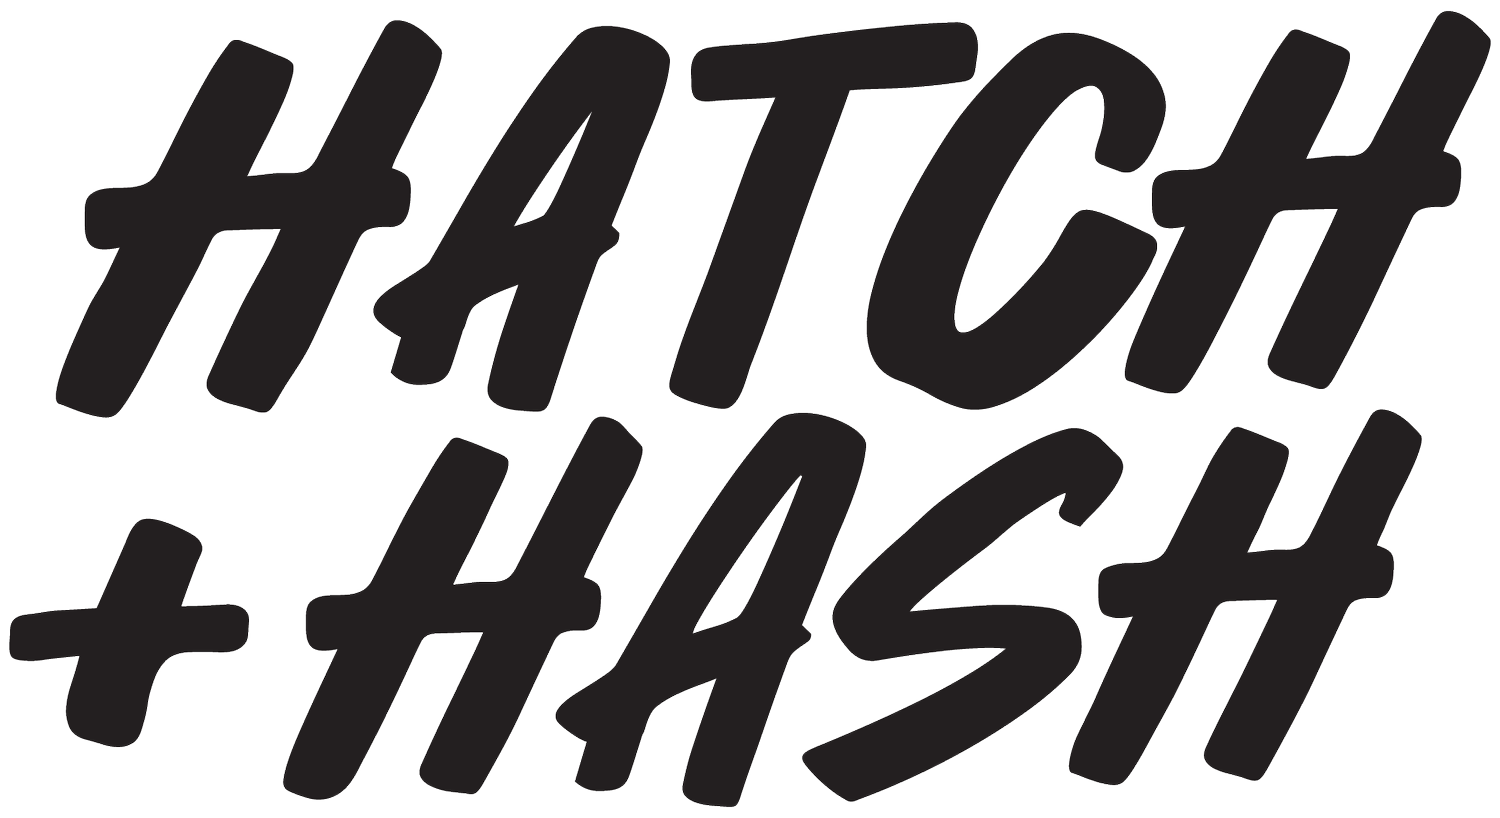 Hatch + Hash